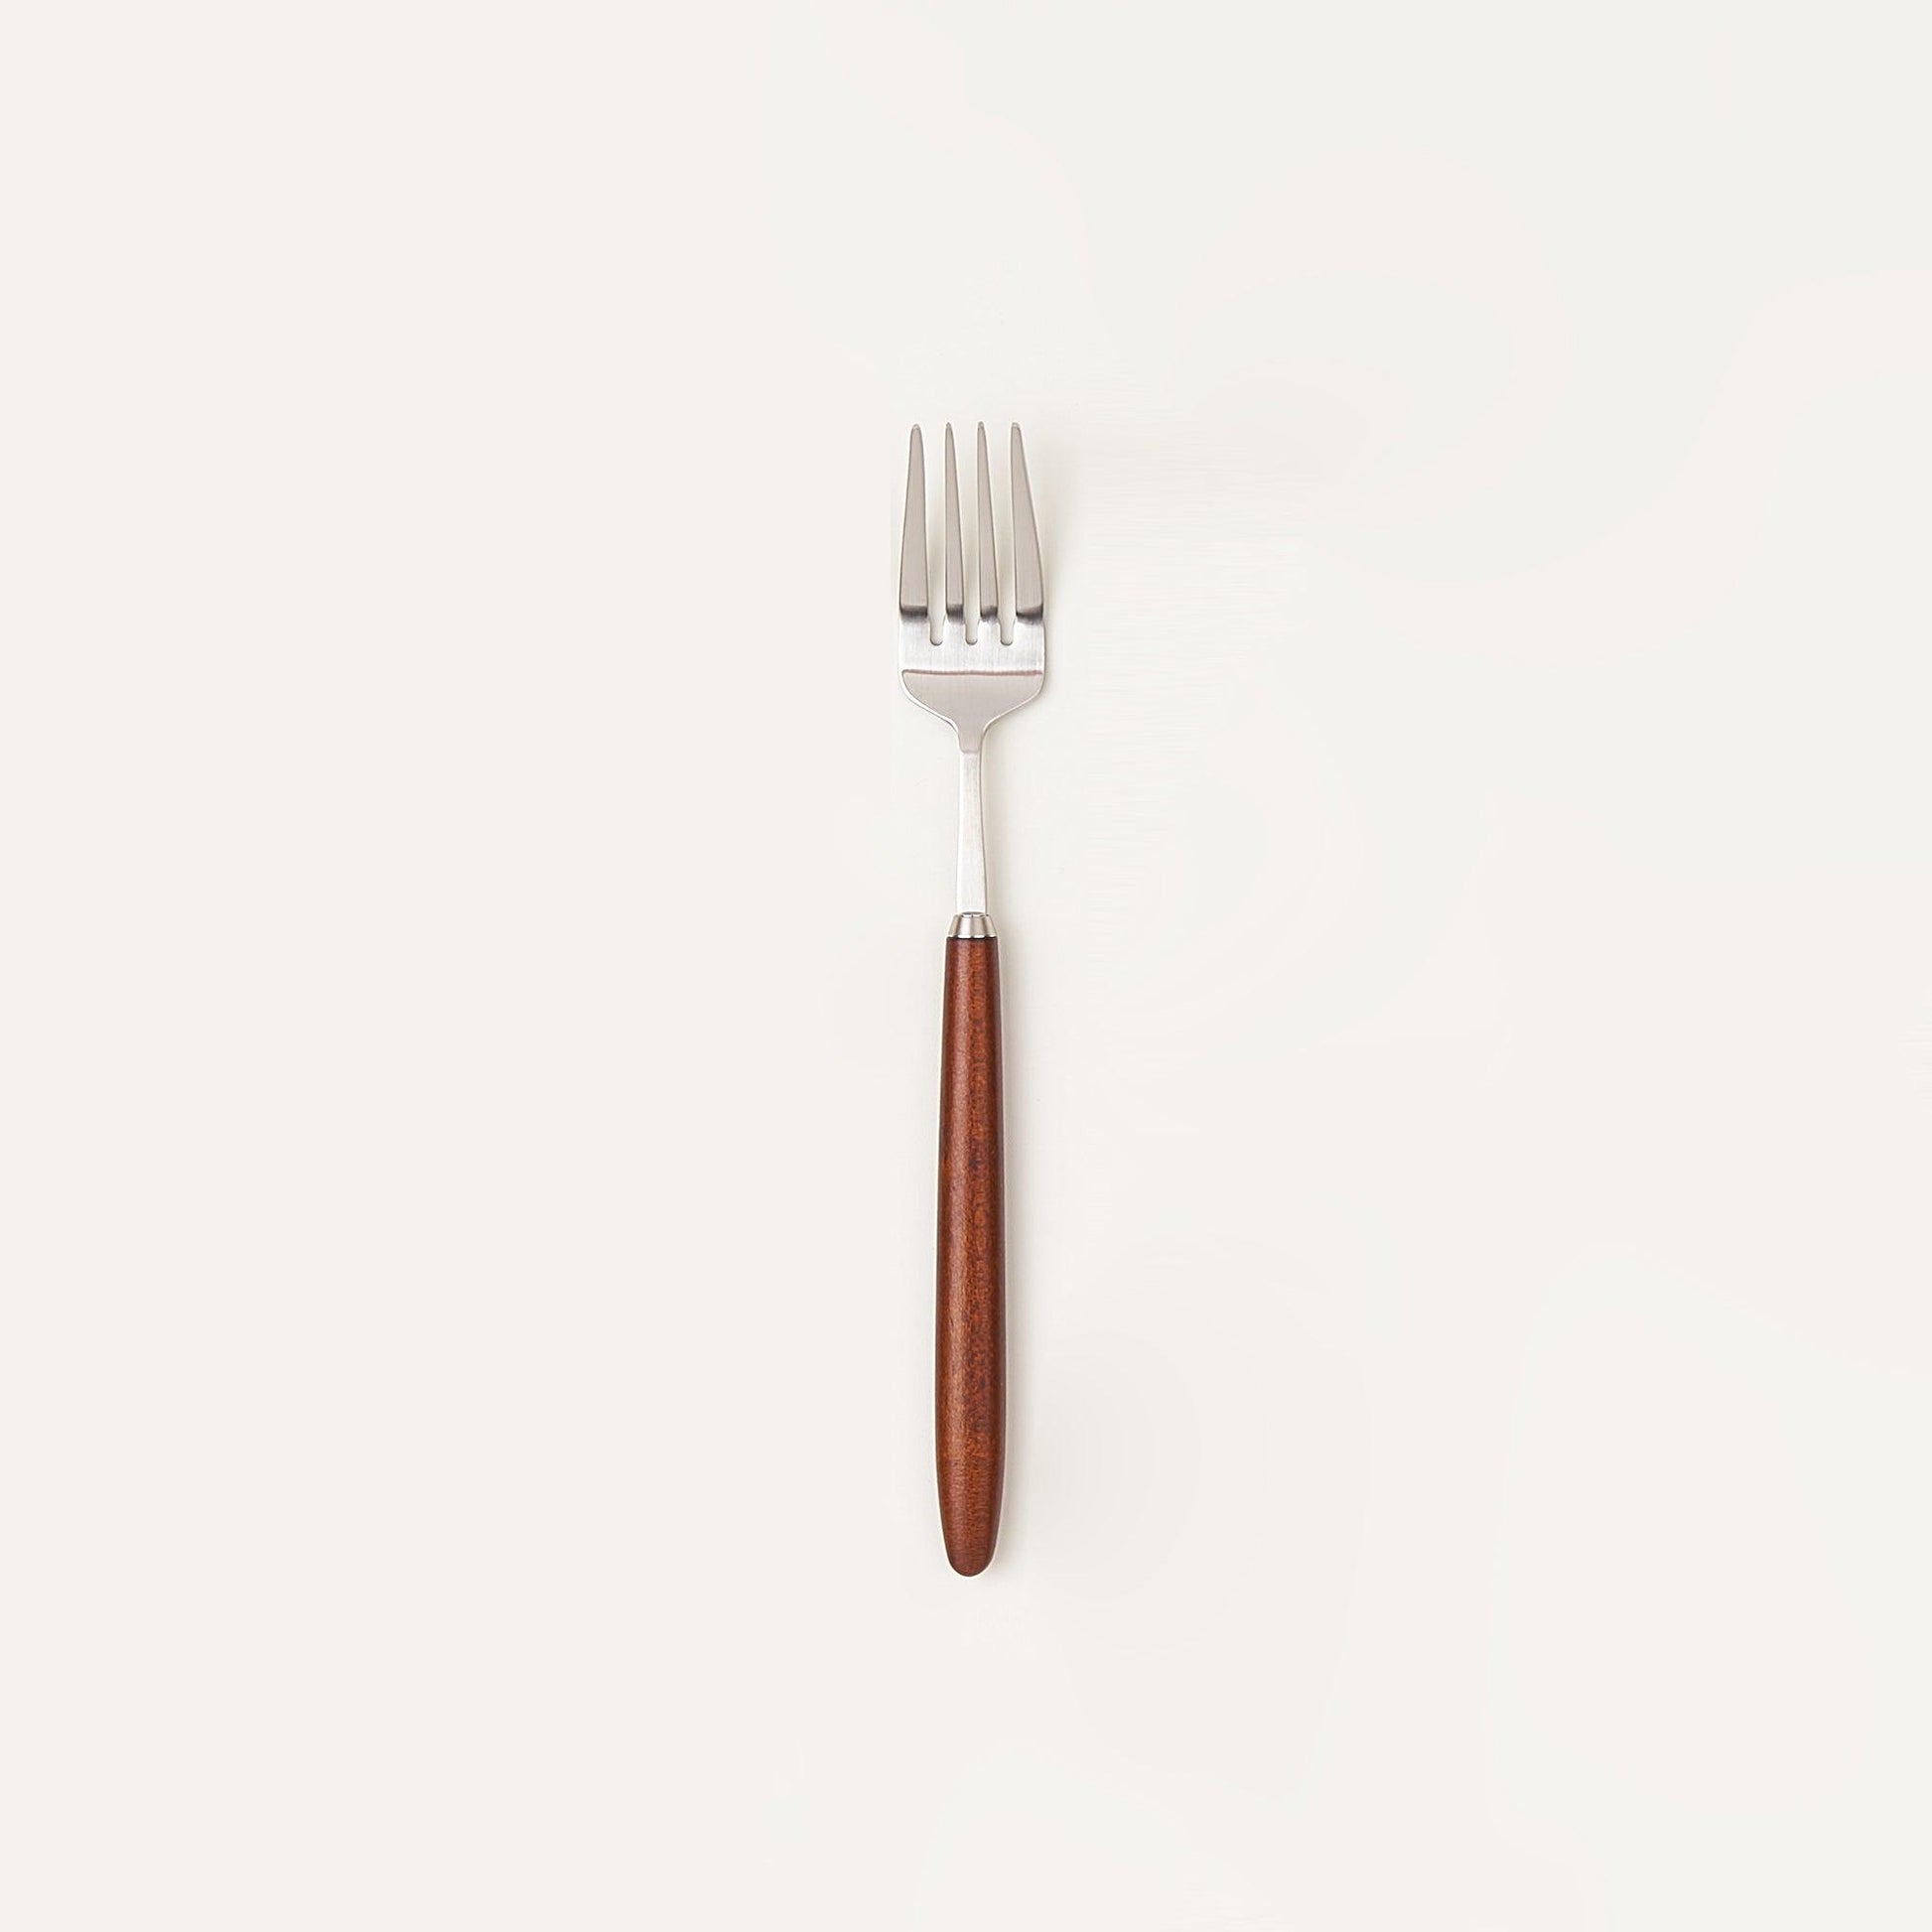 [Bogen] Hard Maple Dessert Fork, 1pc - HANKOOK